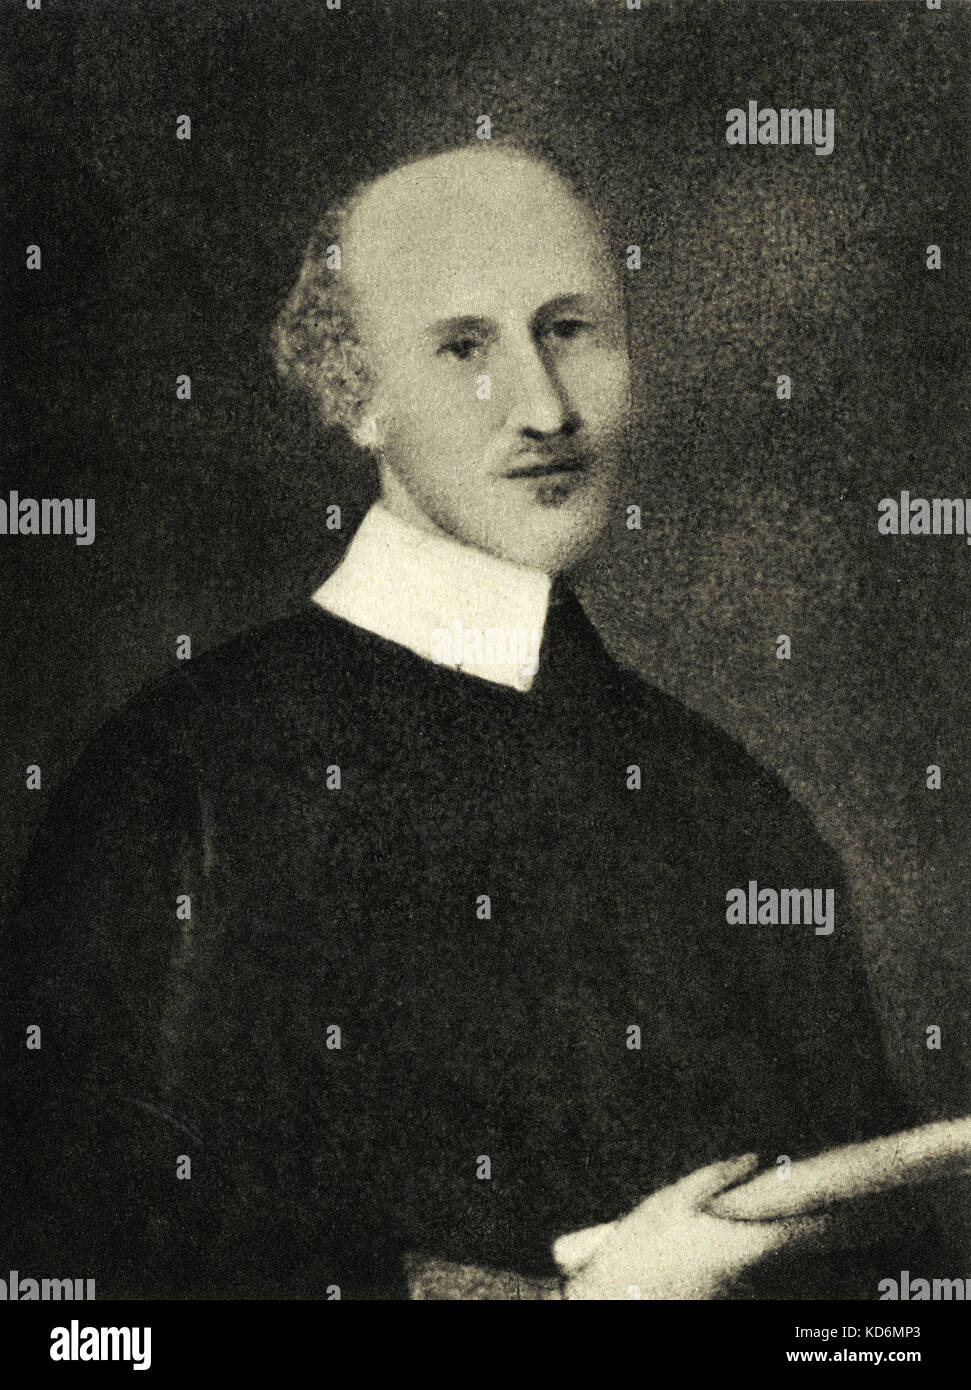 Giovanni Legrenzi, Portrait. Italienischer Komponist und Organist, Vivaldi Master. 1626-1690. Stockfoto